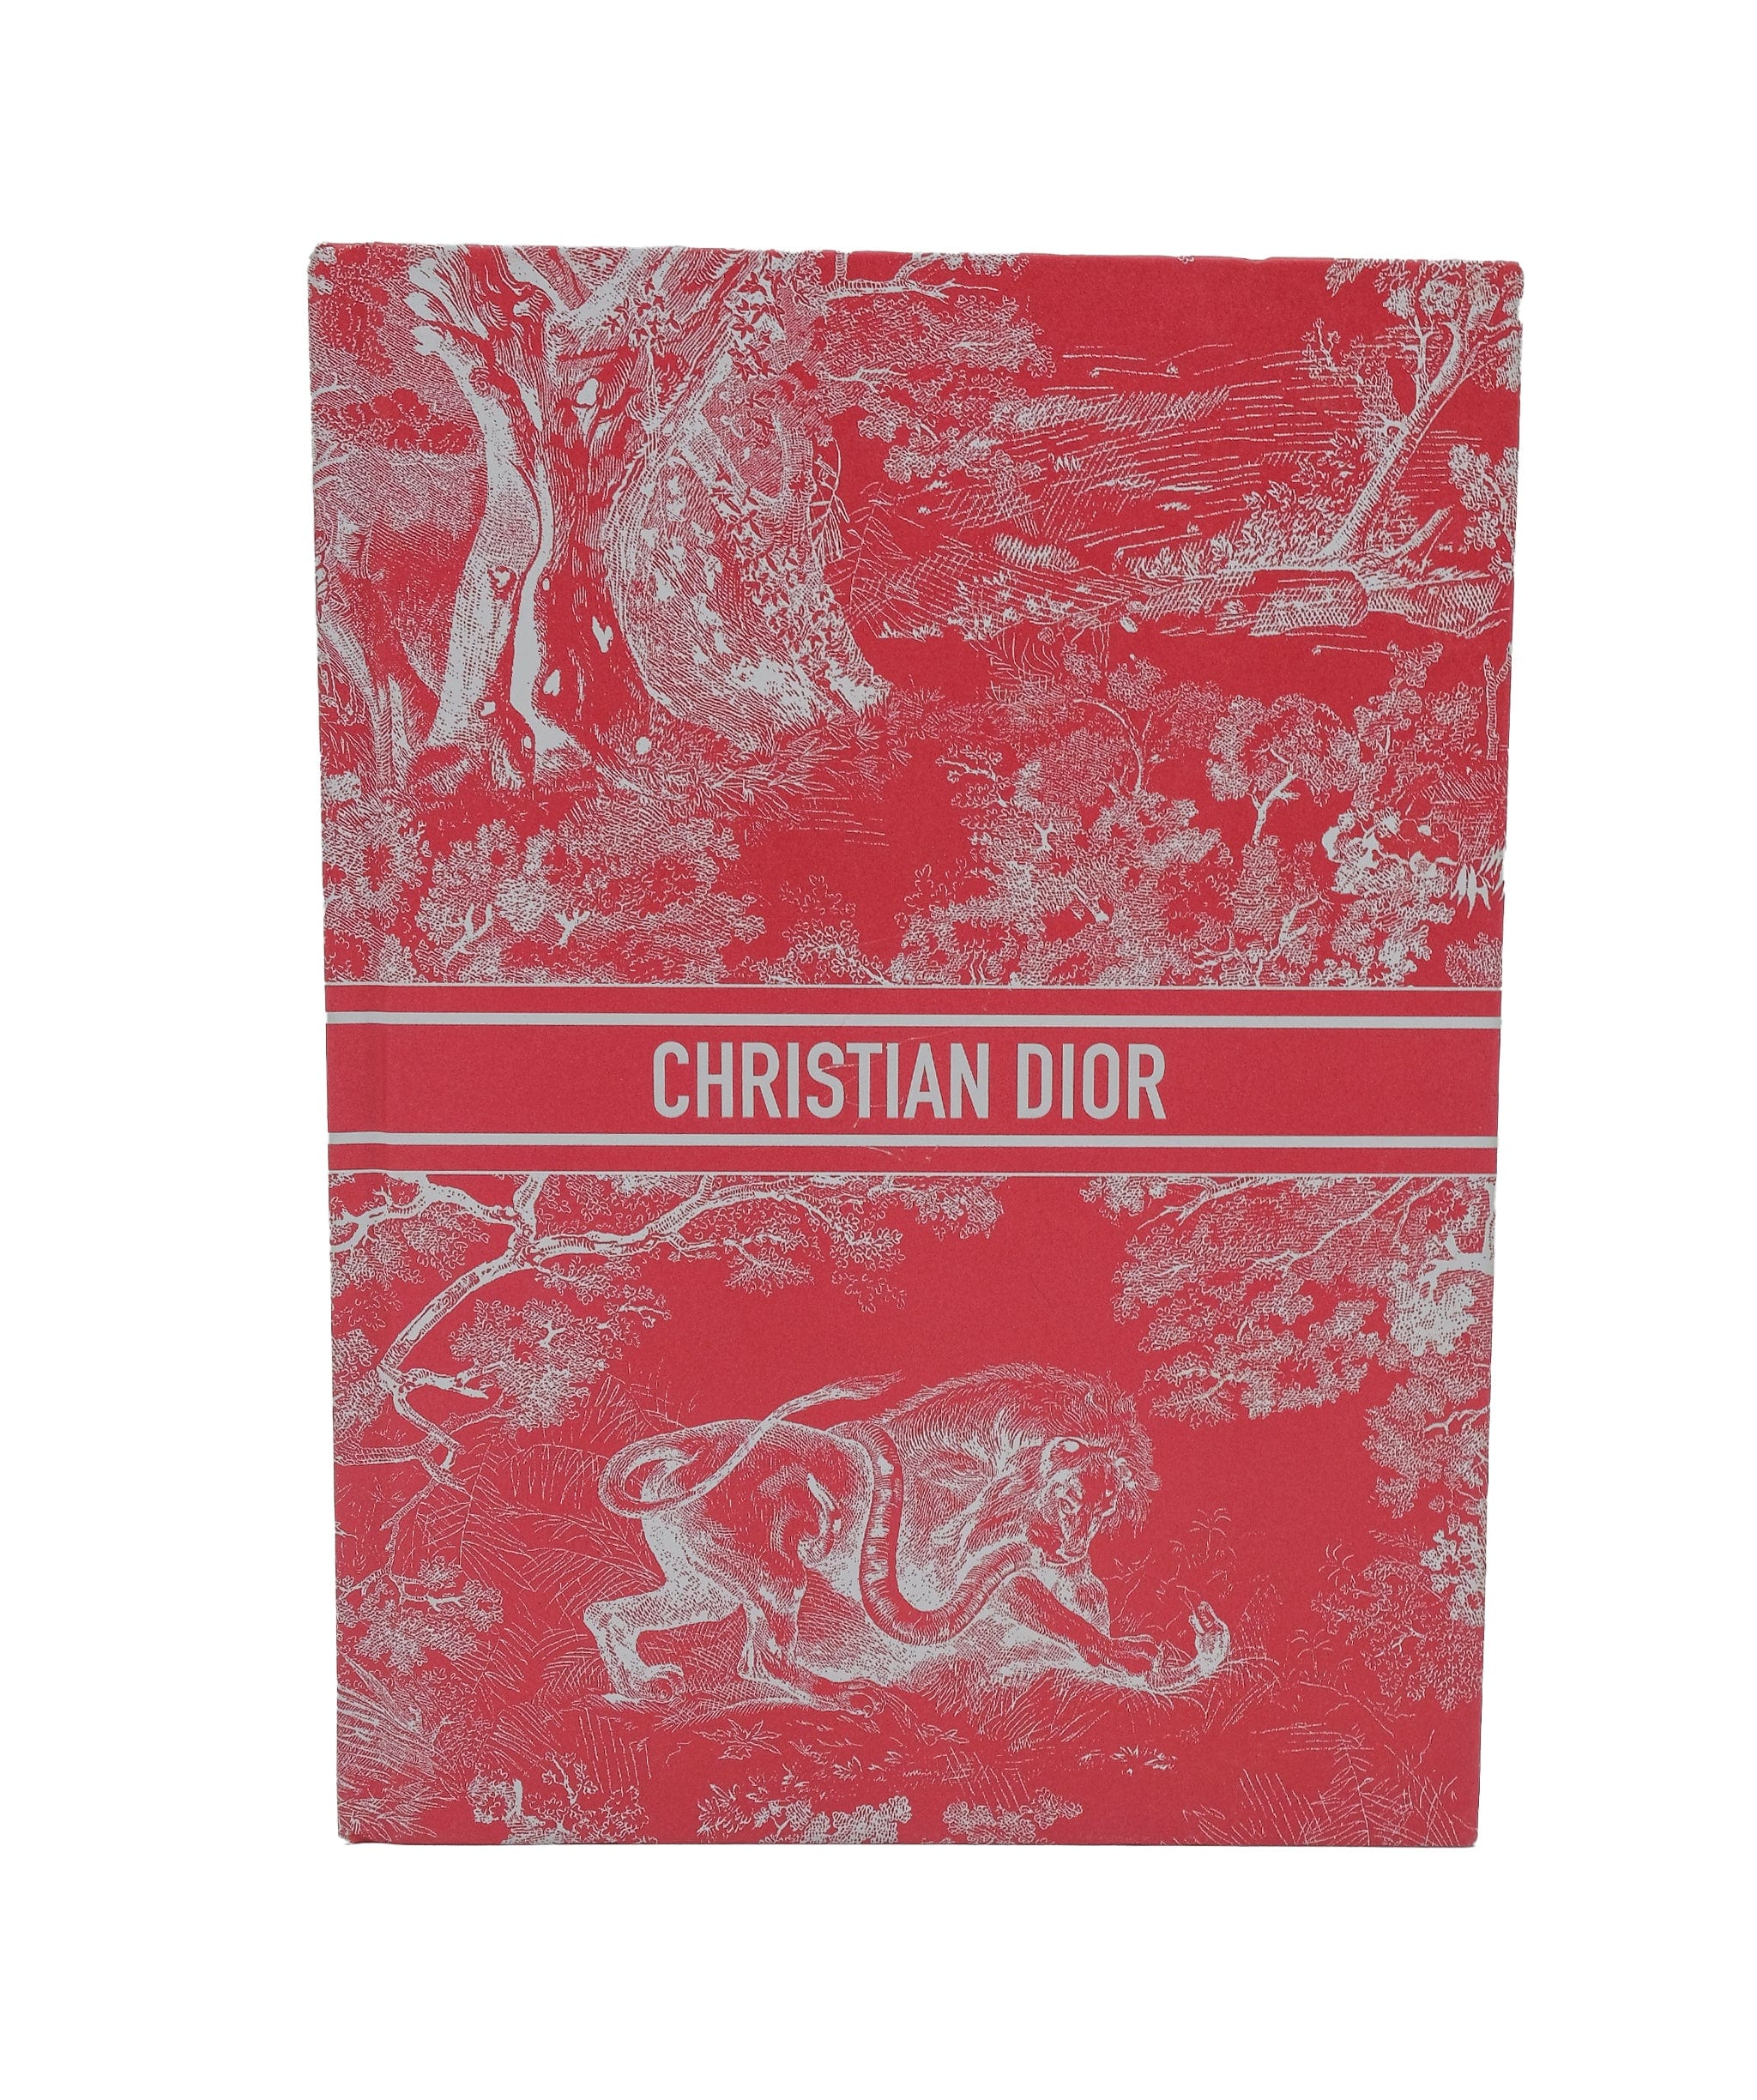 Christian Dior Christian dior Book RJC3320